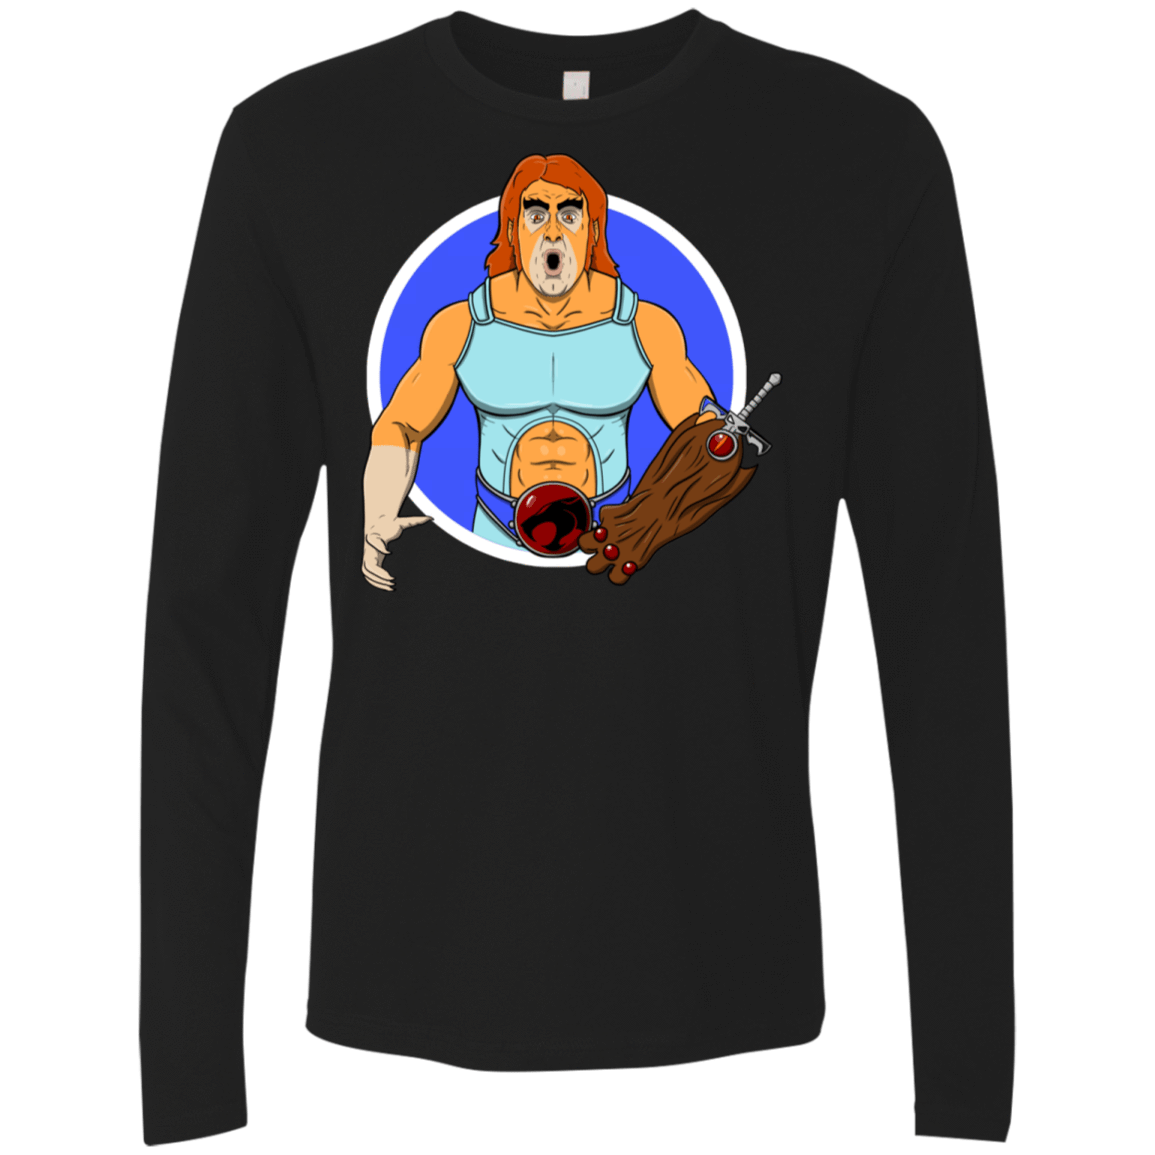 T-Shirts Black / S Natureboy Woooo Men's Premium Long Sleeve